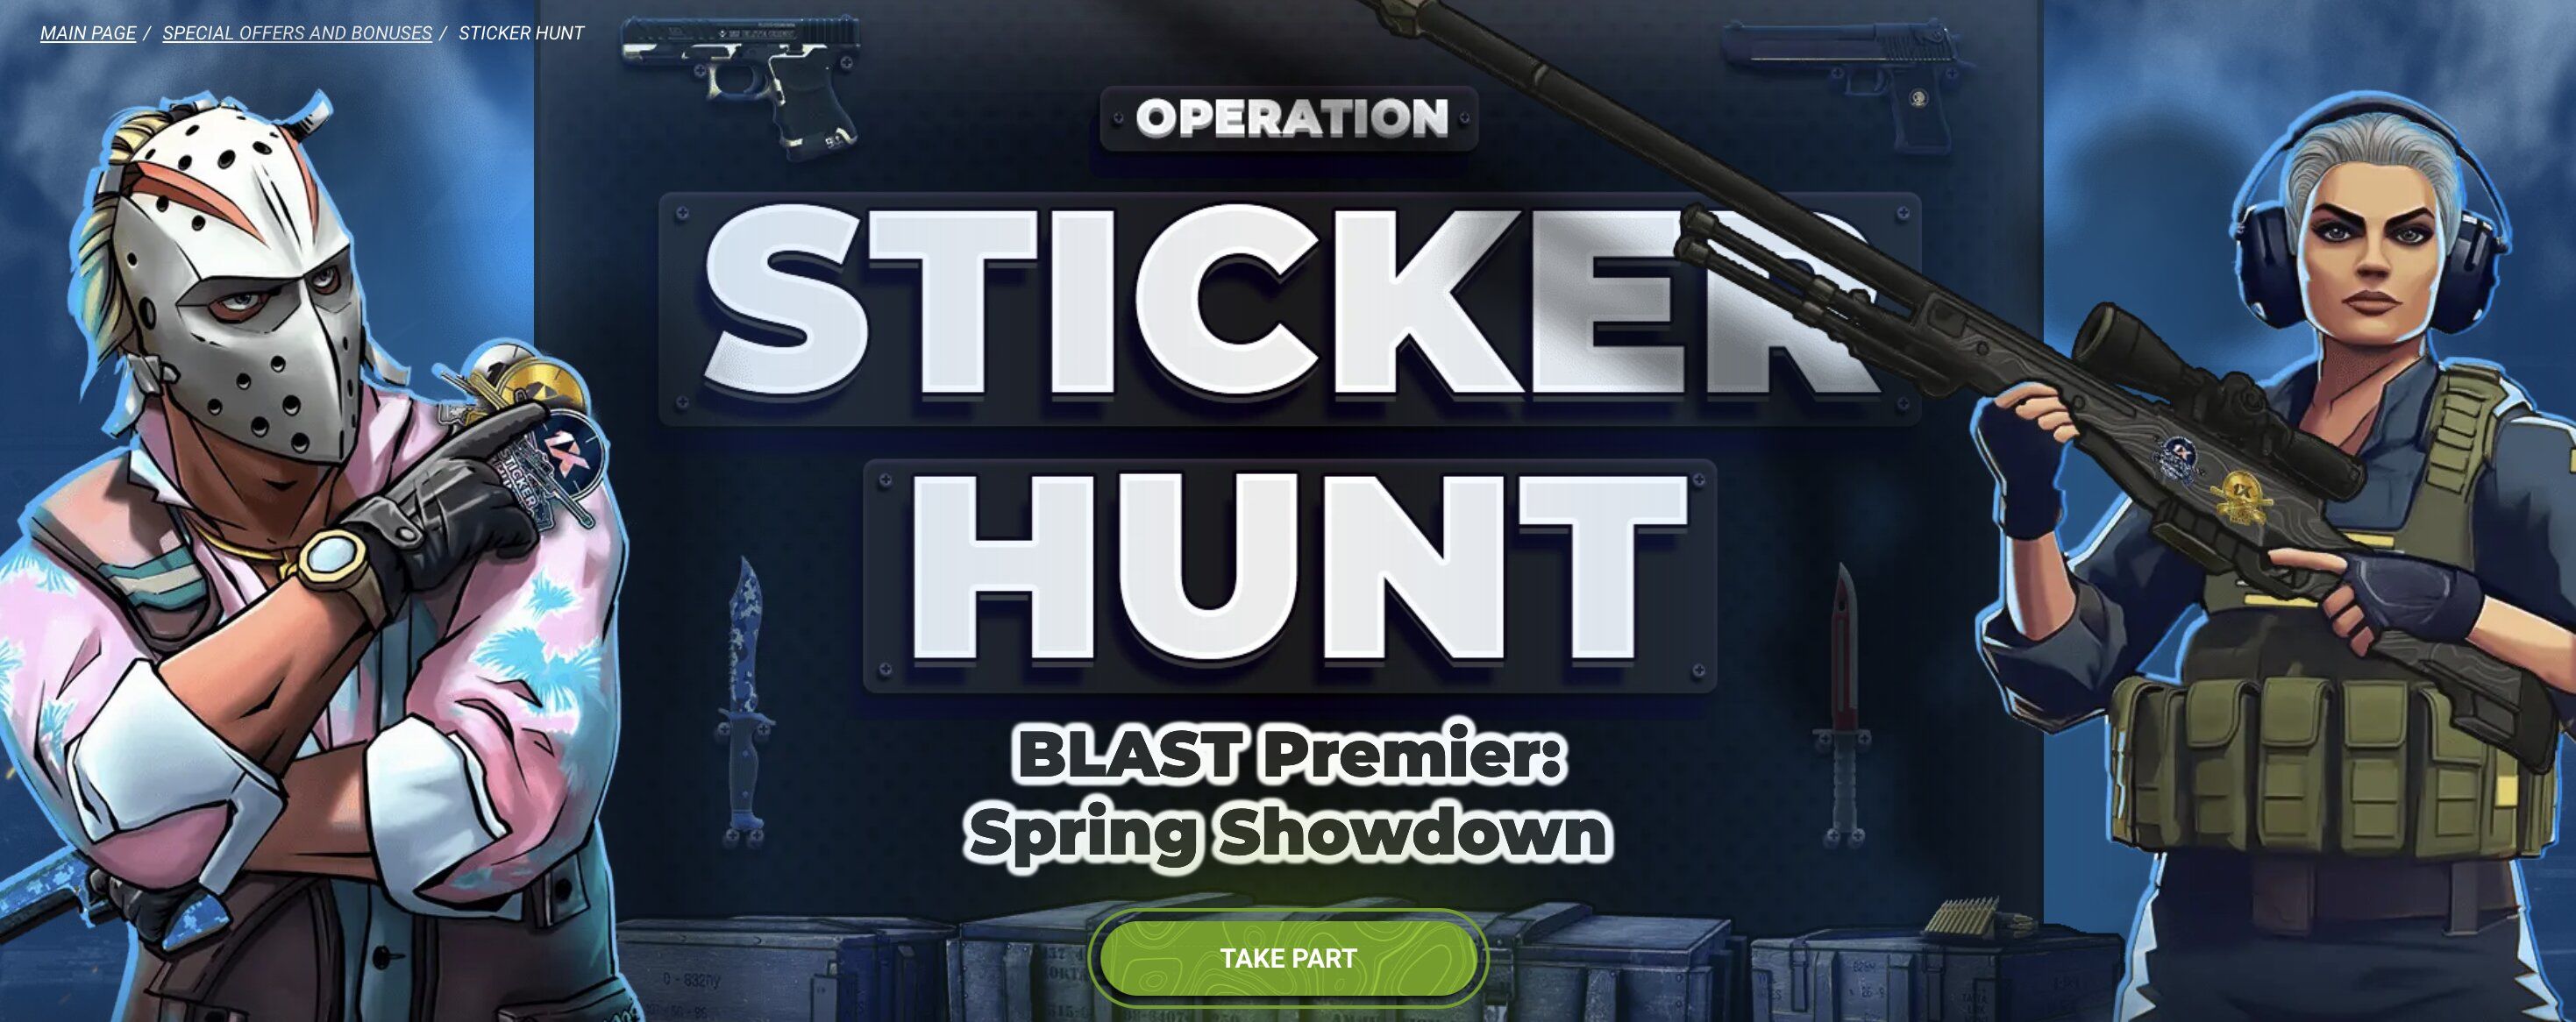 1xBet Operation Sticker Hunt BLAST Premier: Spring Showdown Promotion